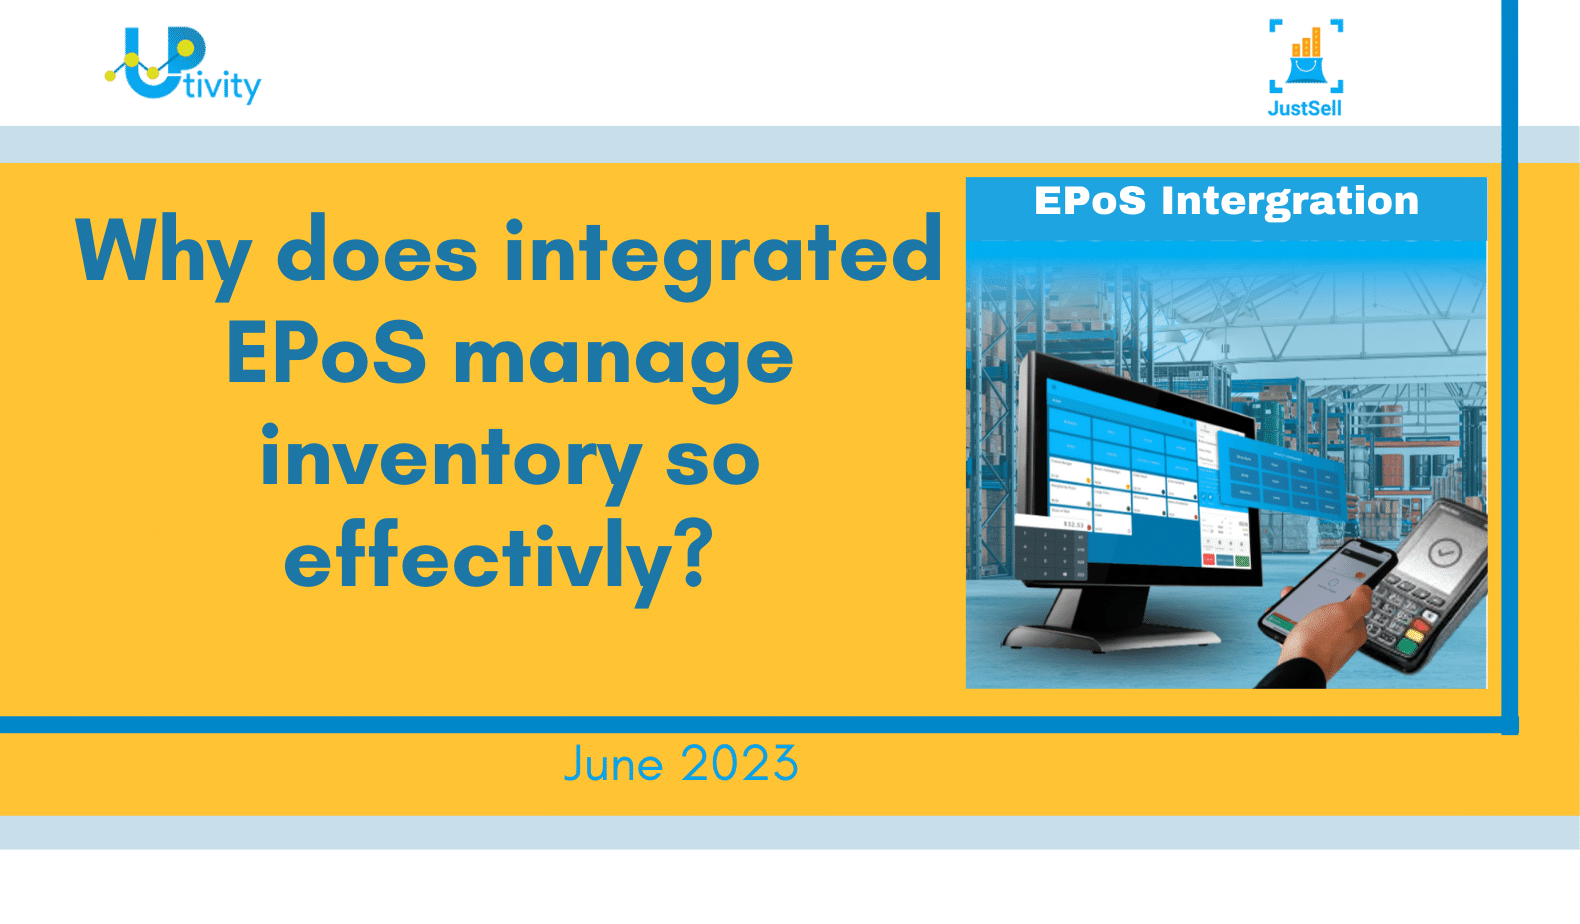 EPoS managing inventory